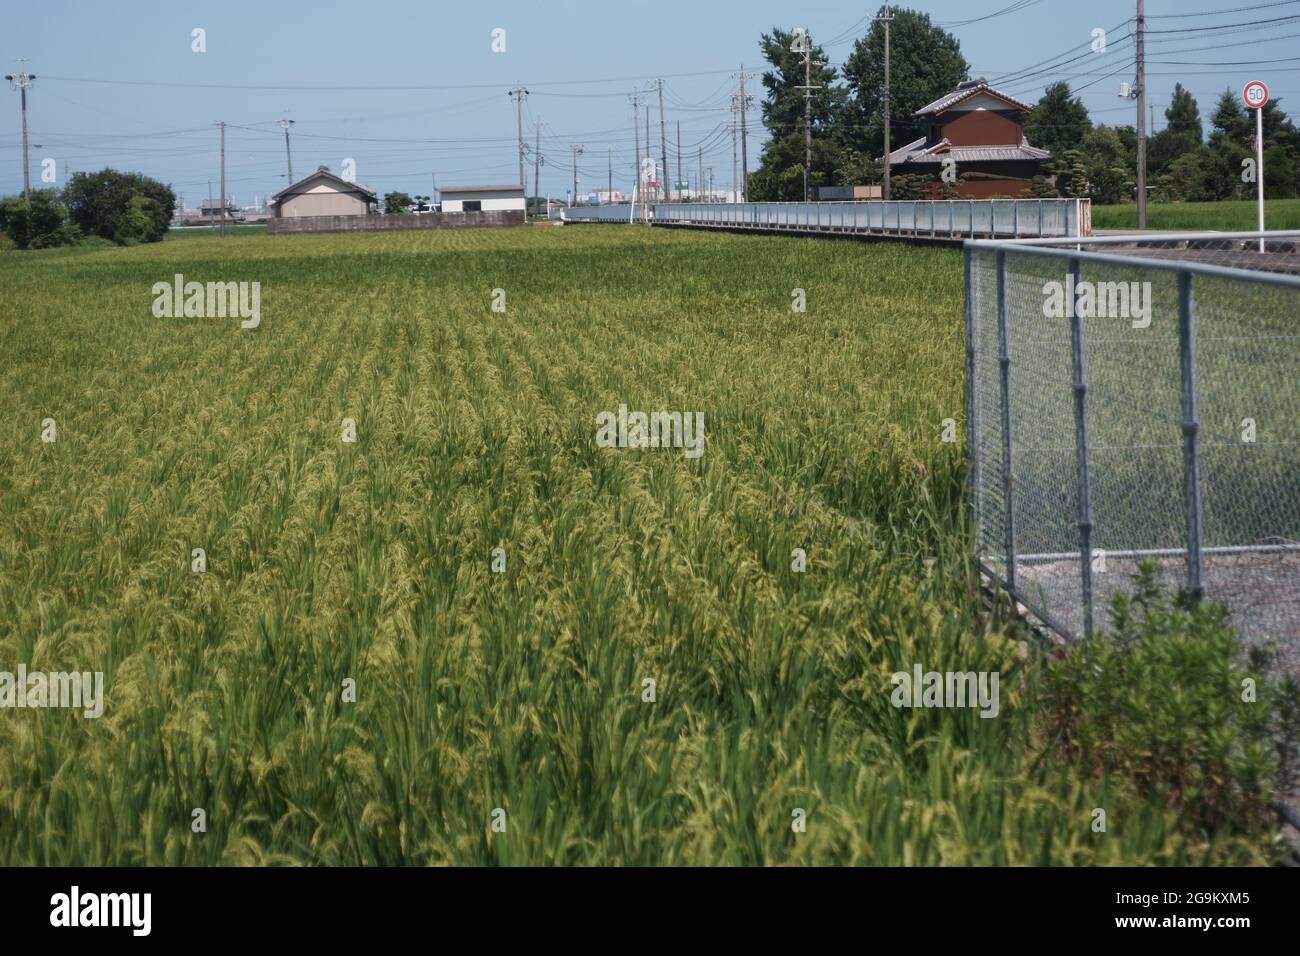 Campo de paddy japonés a finales de julio Foto de stock